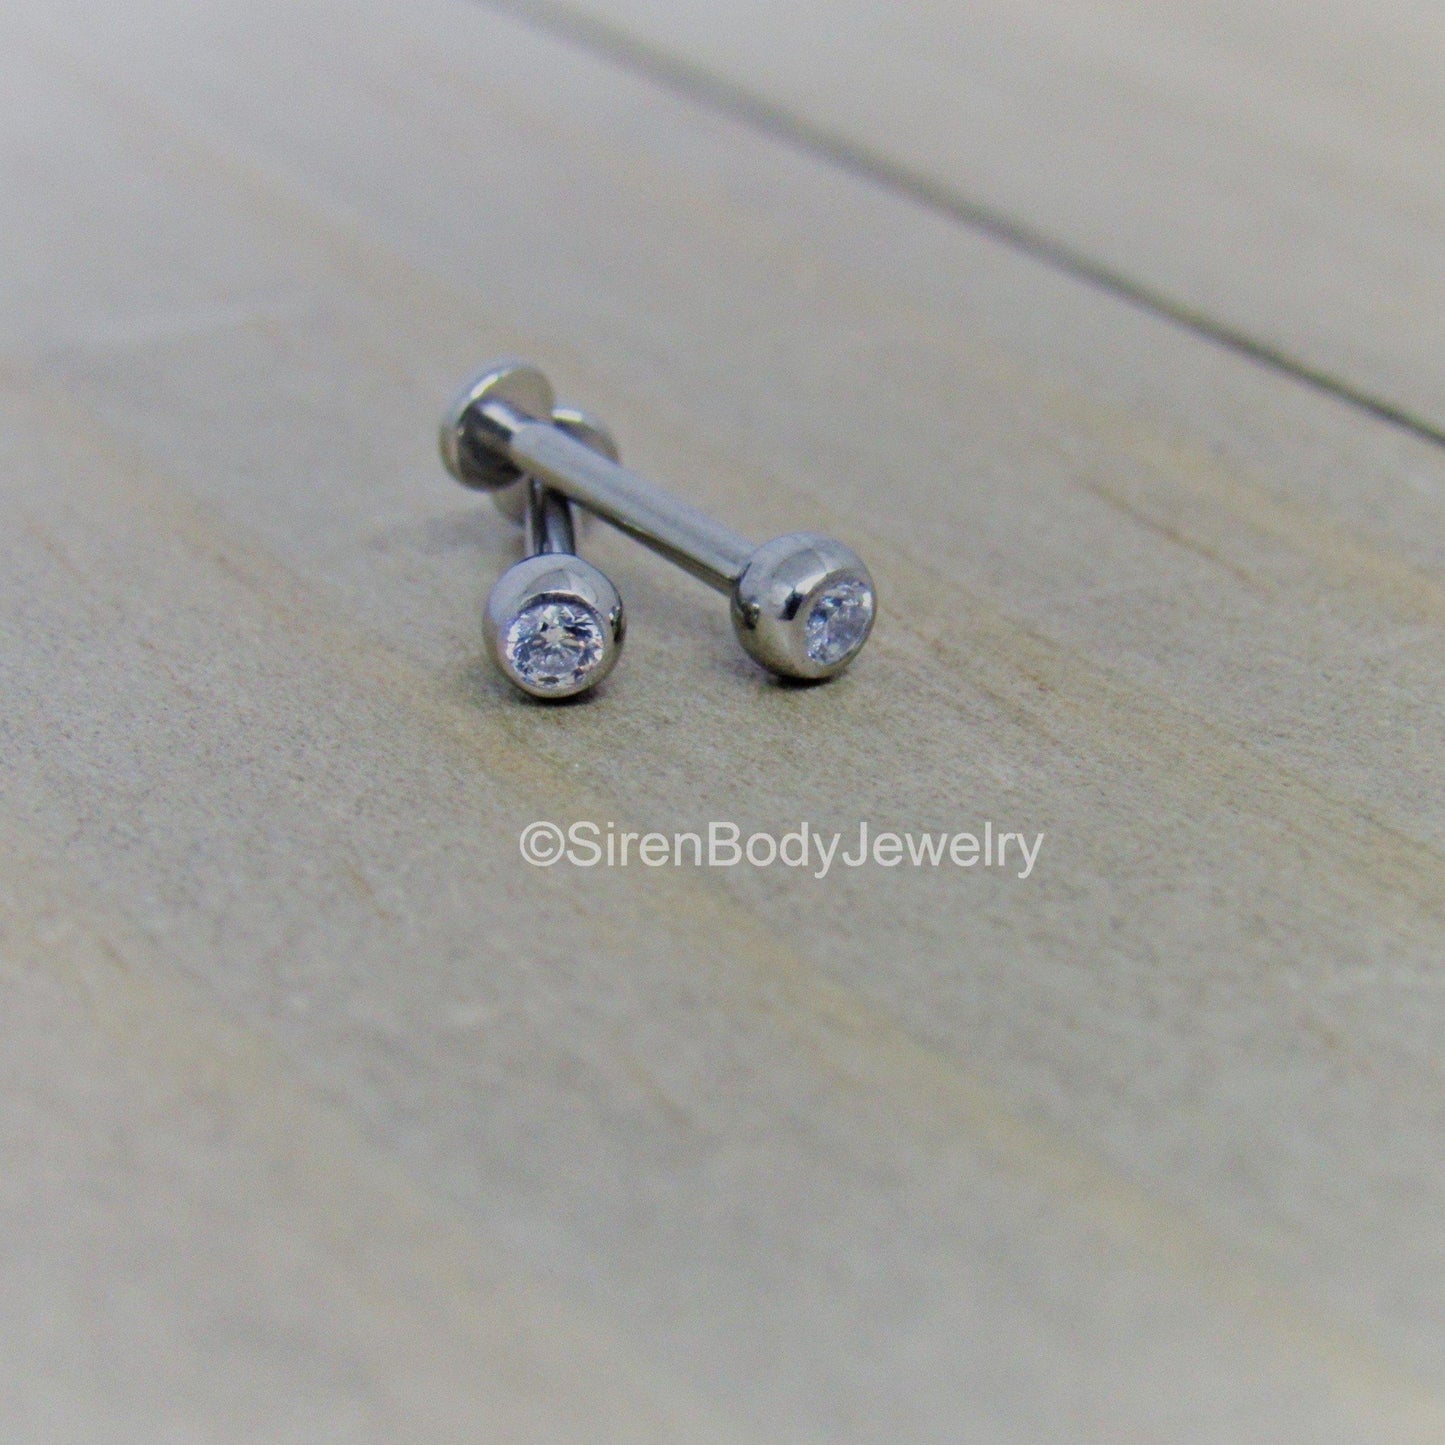 16g titanium gemstone flat back earring stud set